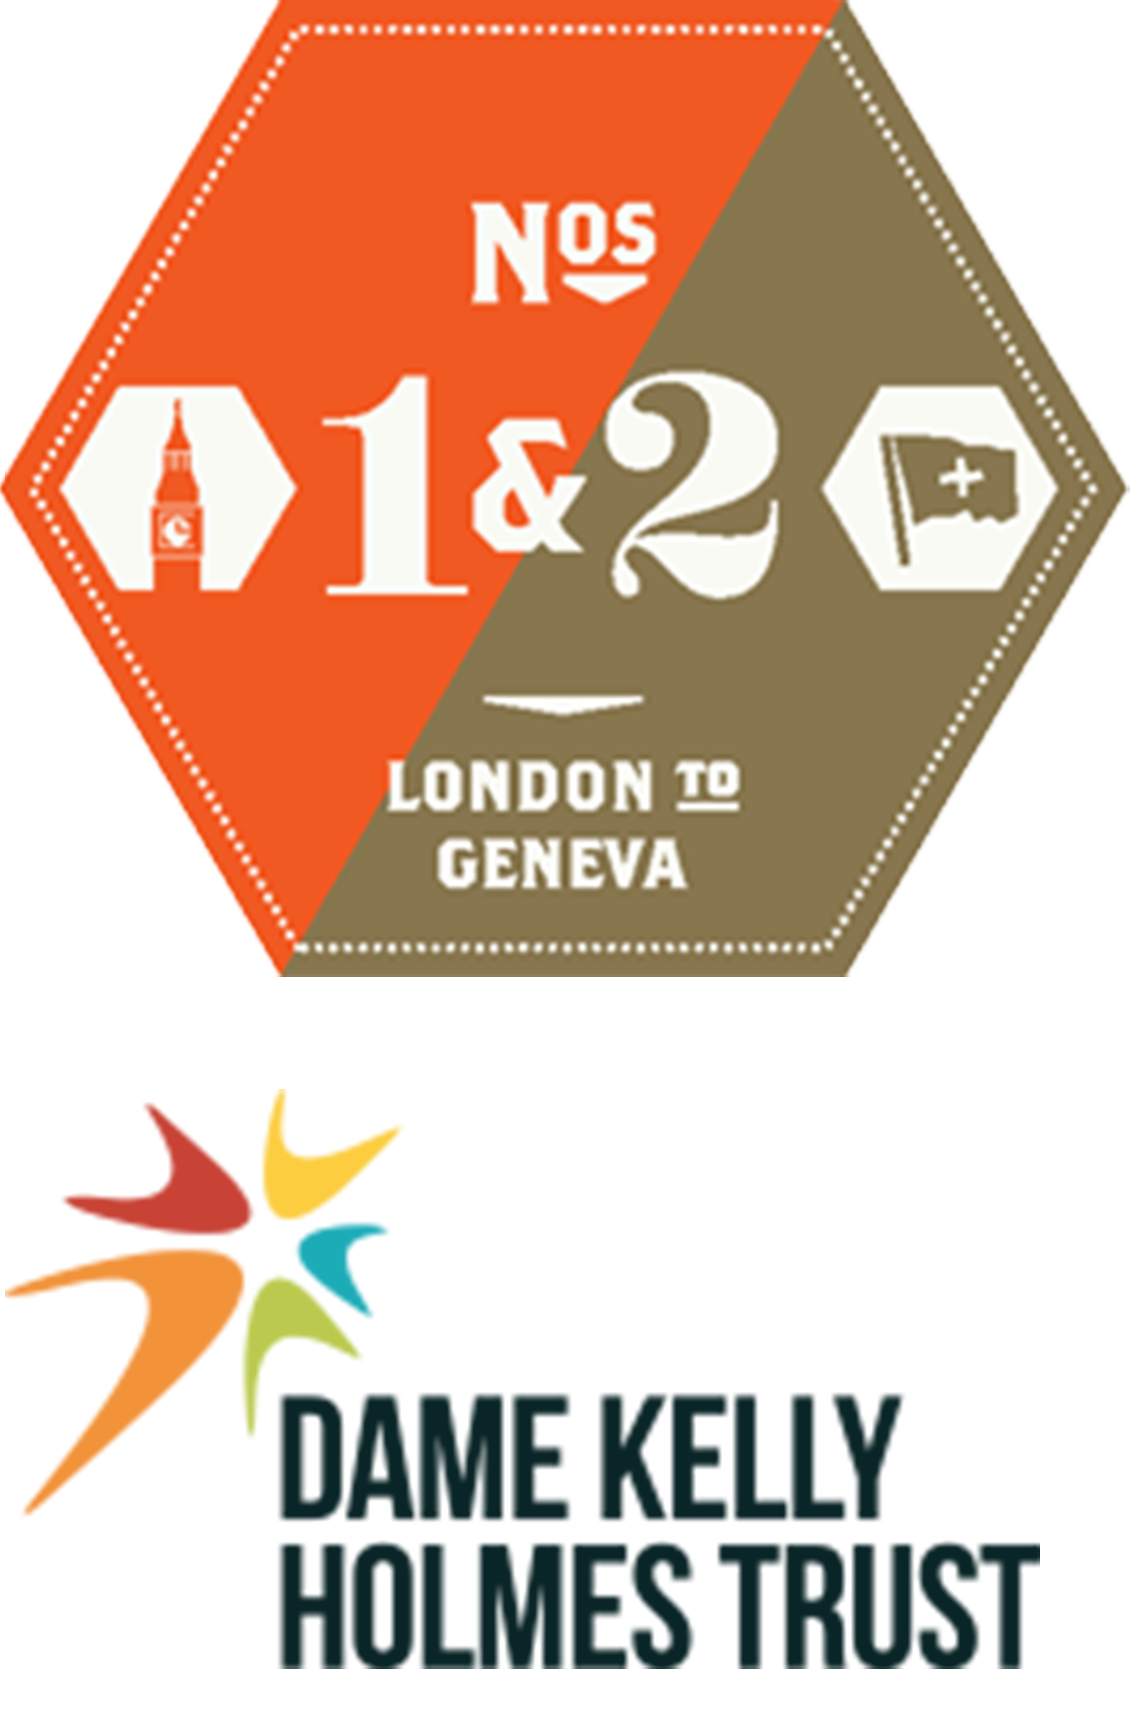 London to Geneva Cycling Challenge - Cycling Tours - Ride25